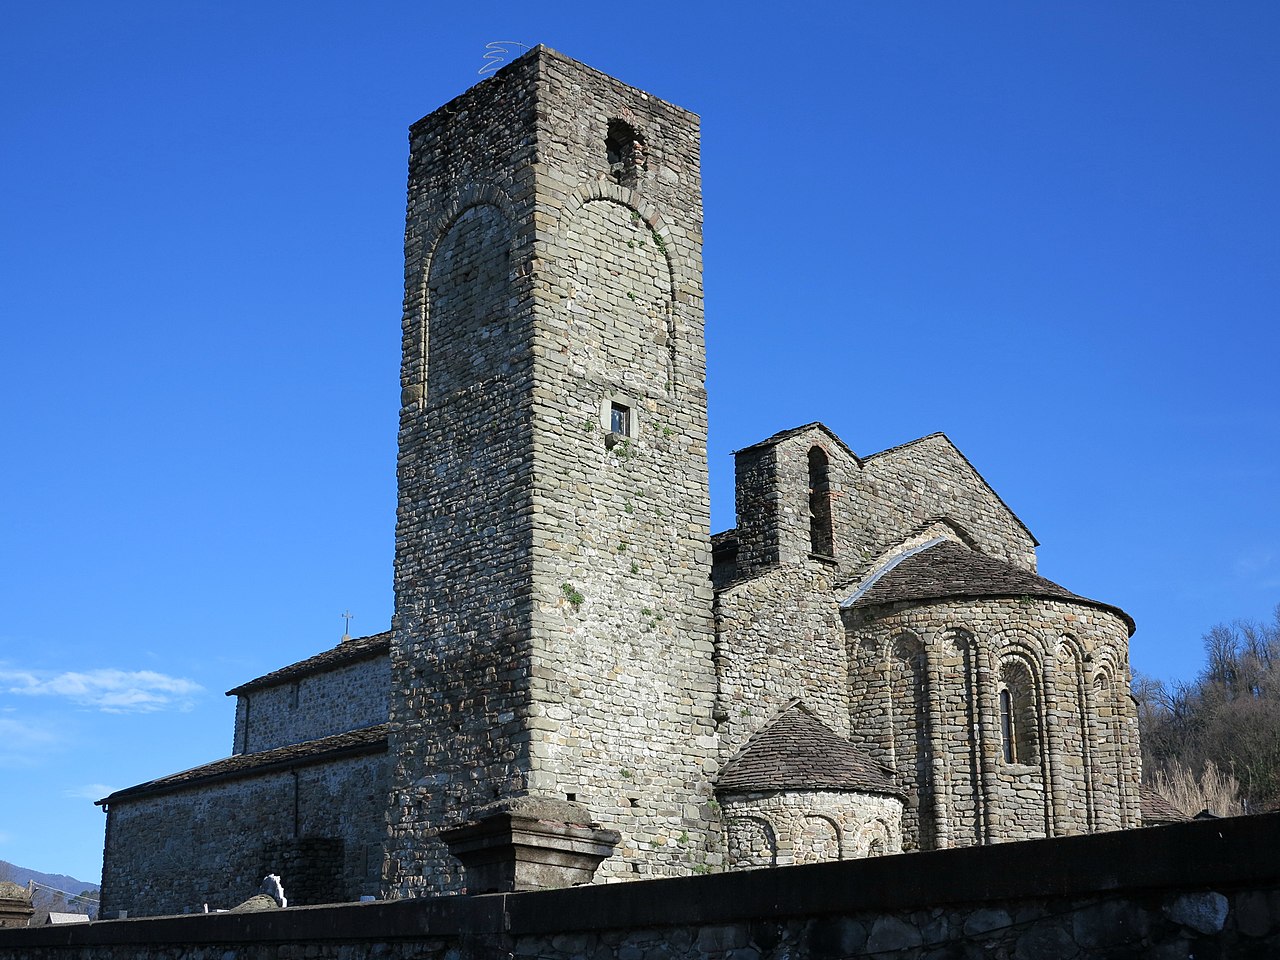 The parish church of Sorano